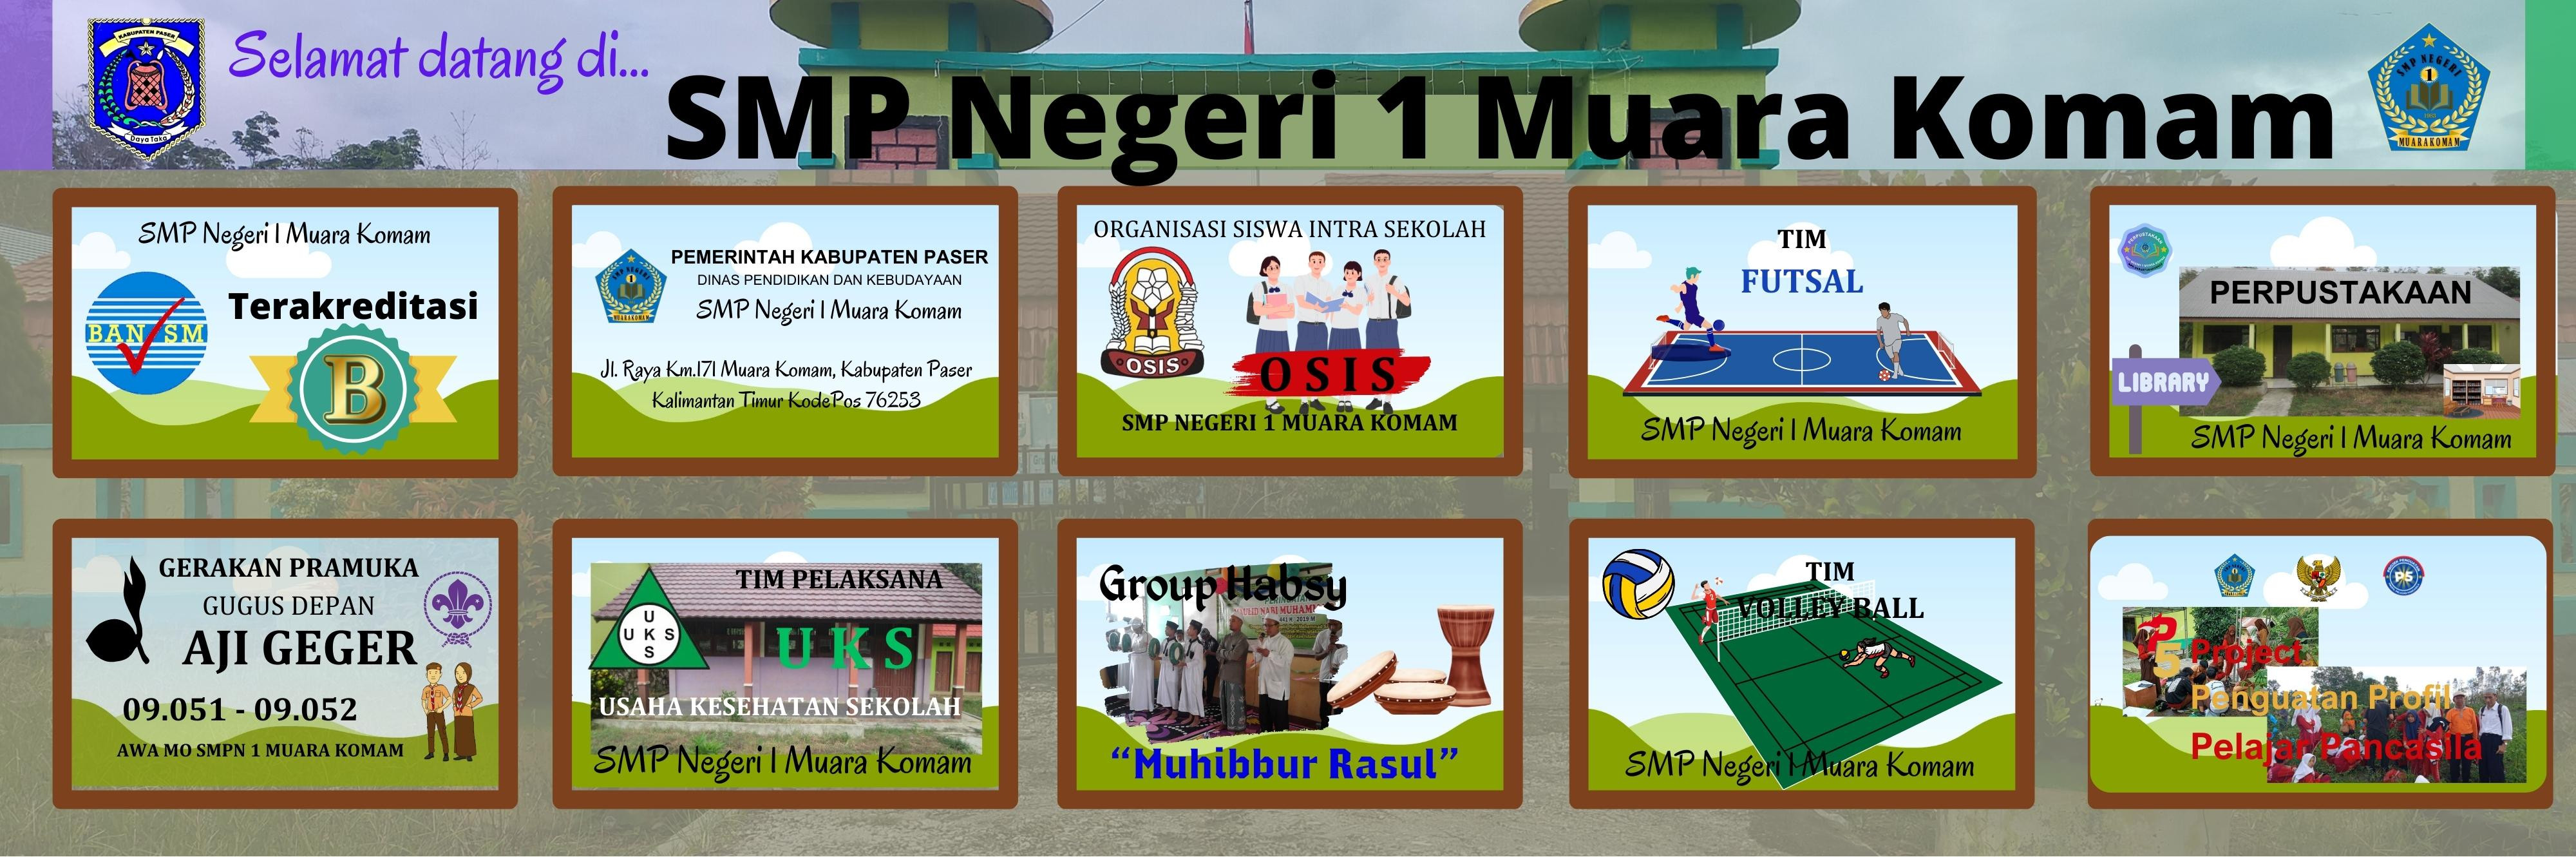 Welcome to SMP Negeri 1 Muara Komam